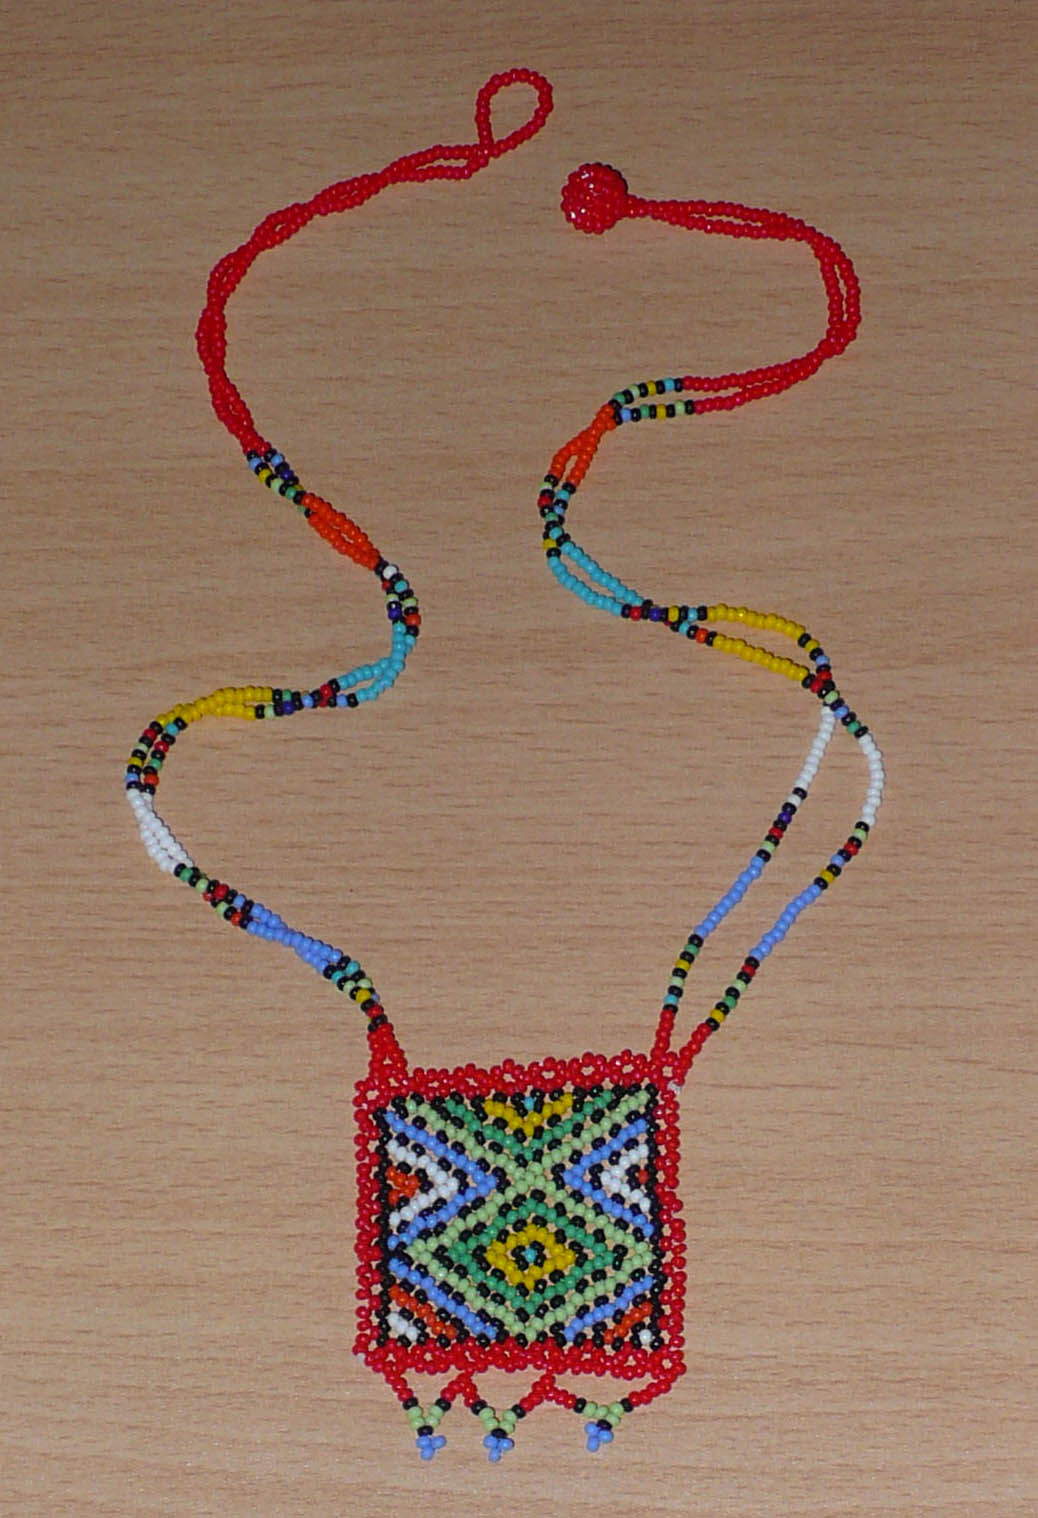 Collier sud-africain rouge et multicolore